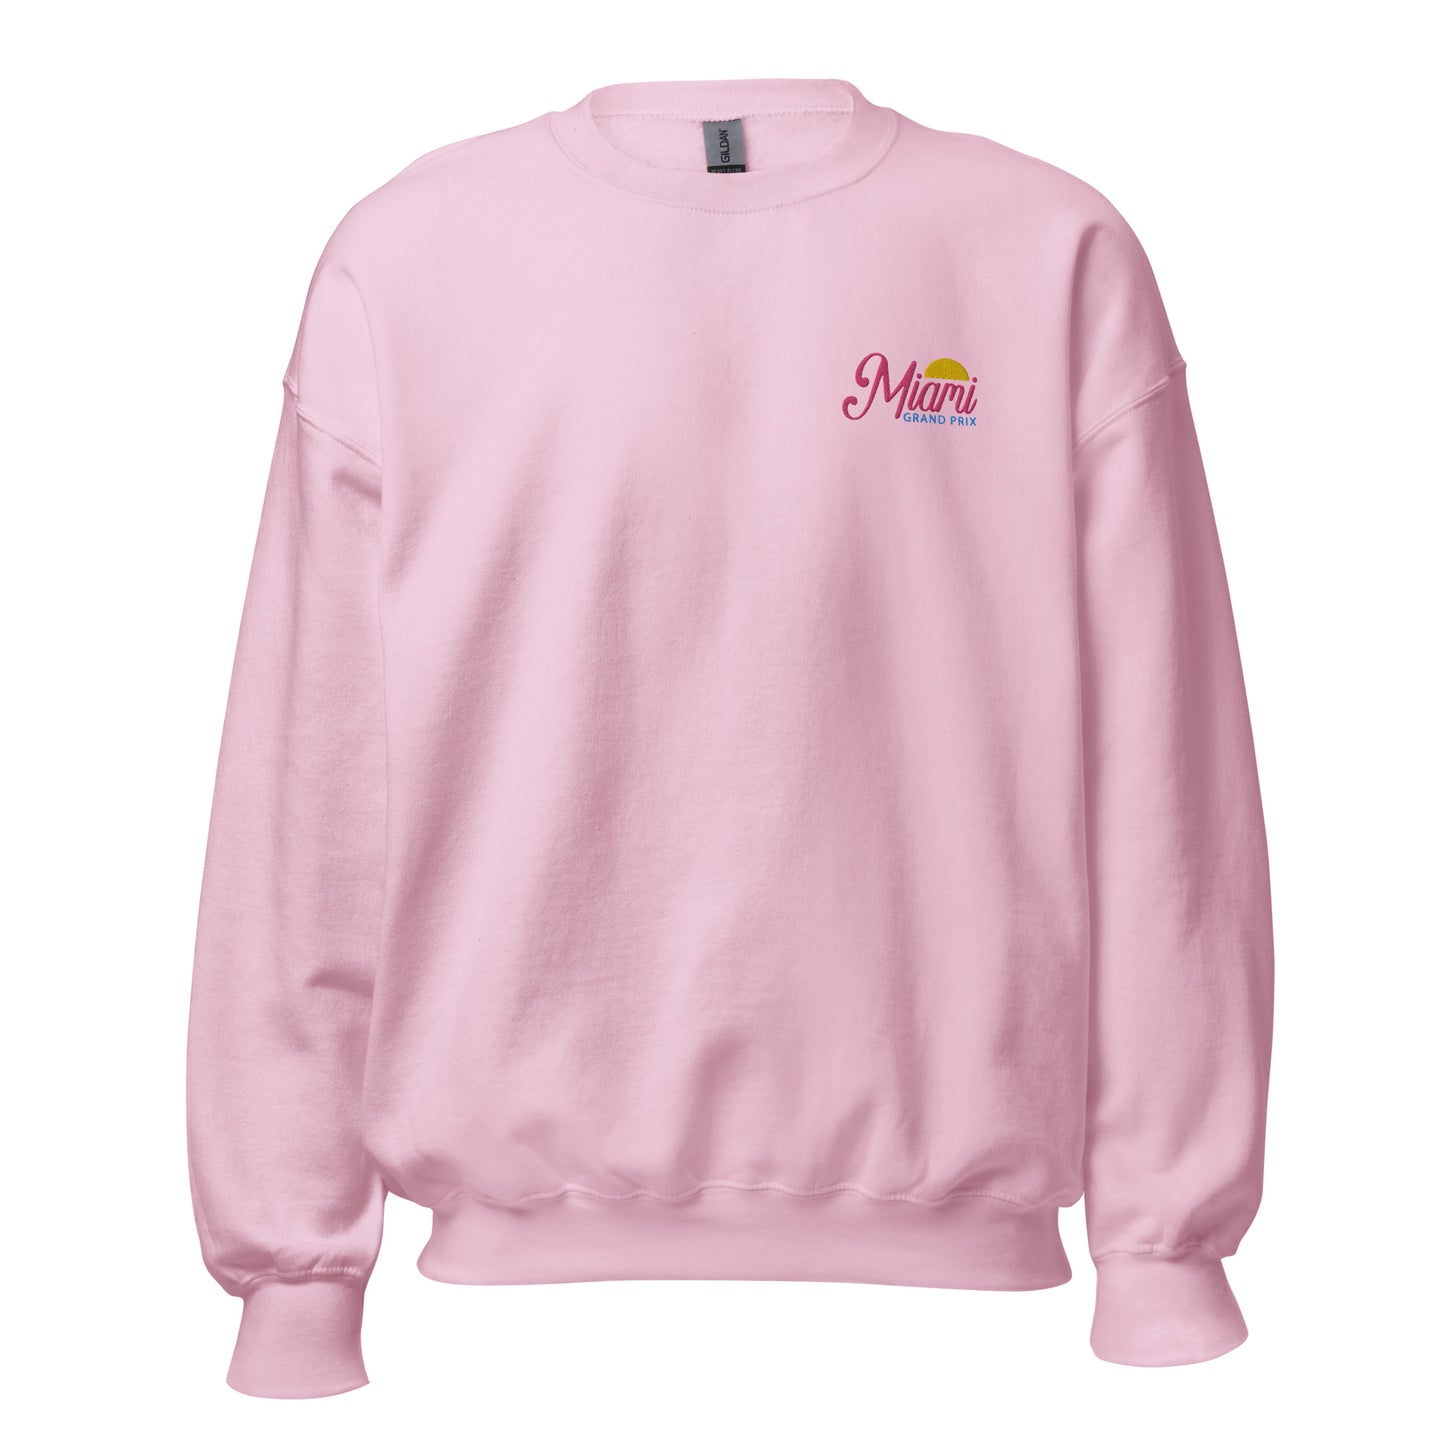 Miami Grand Prix Embroidered Sweatshirt pink